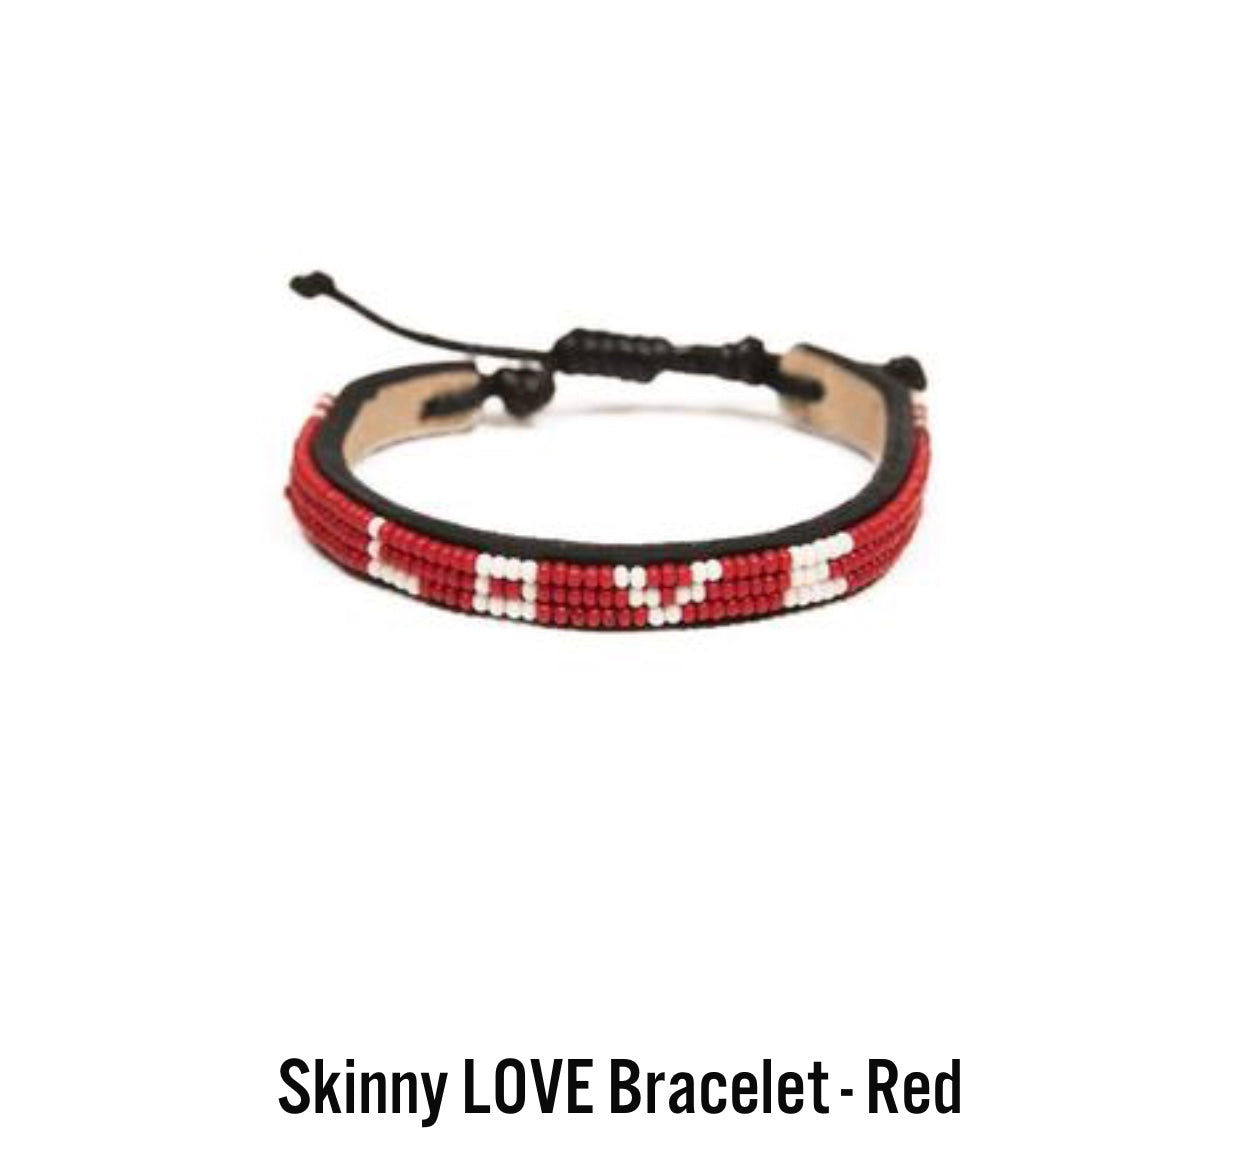 Love project original love bracelet